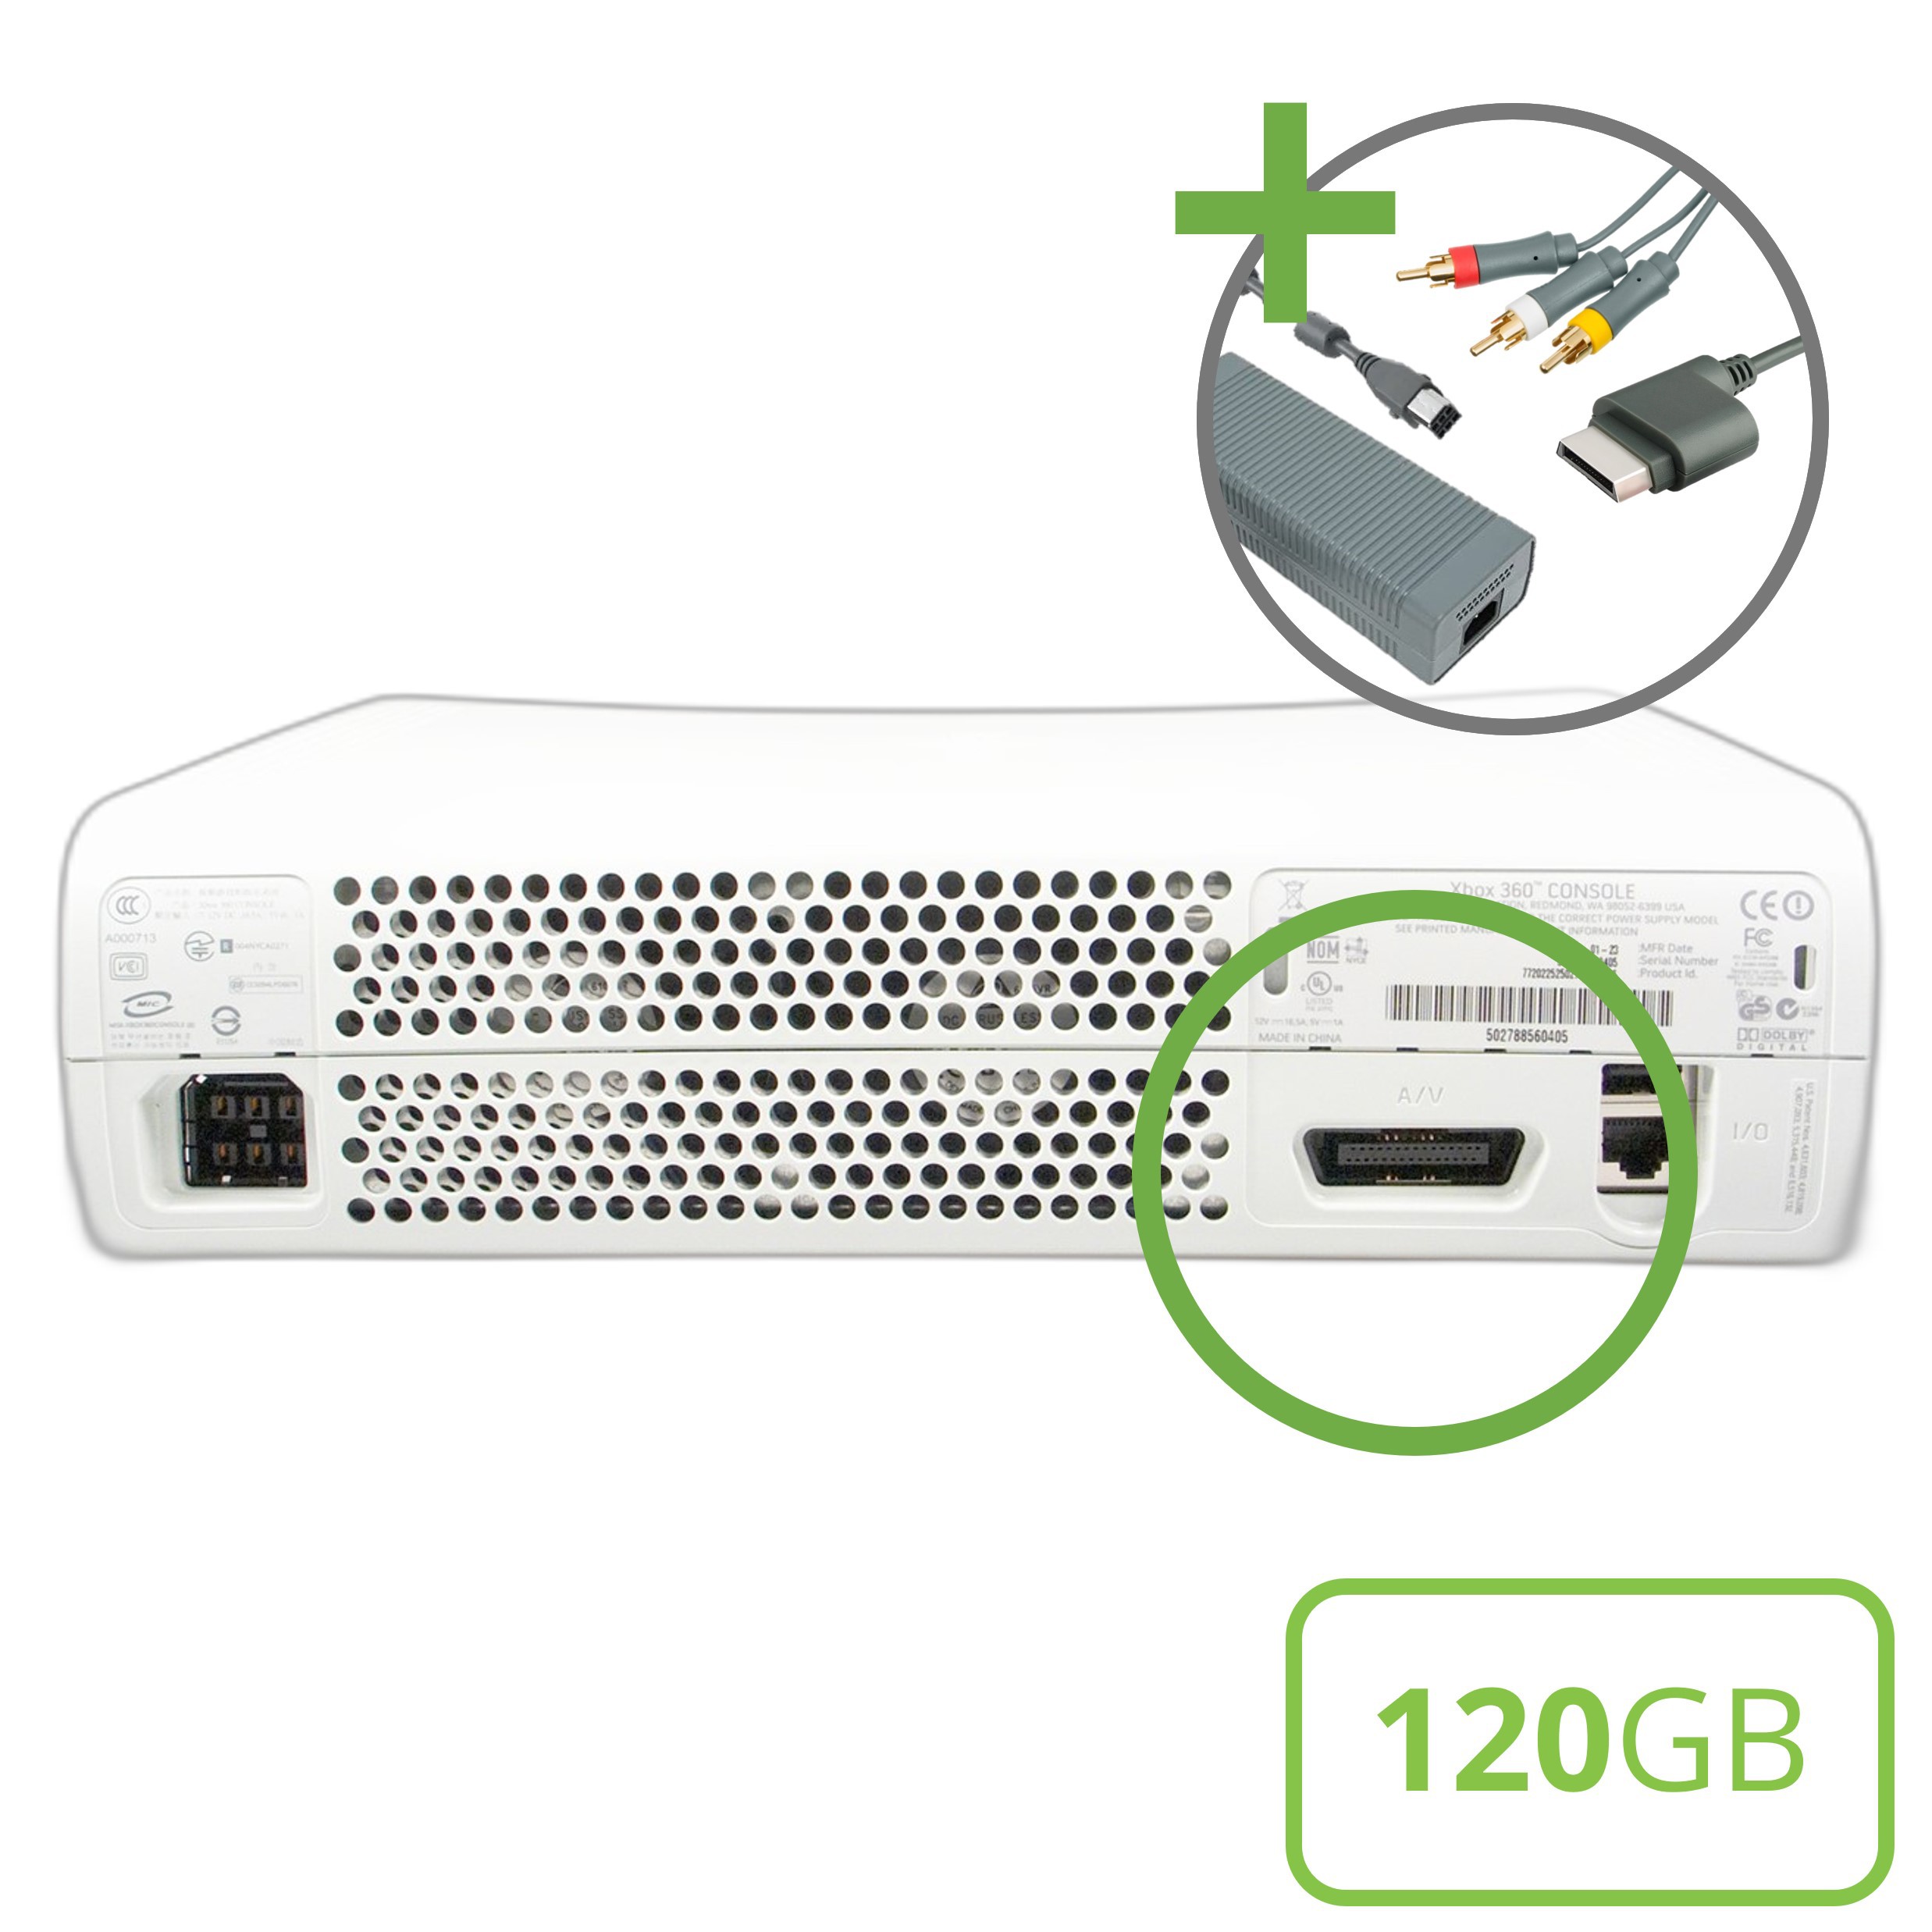 Microsoft Xbox 360 Premium Console (AV) - 120GB - Xbox 360 Hardware - 4